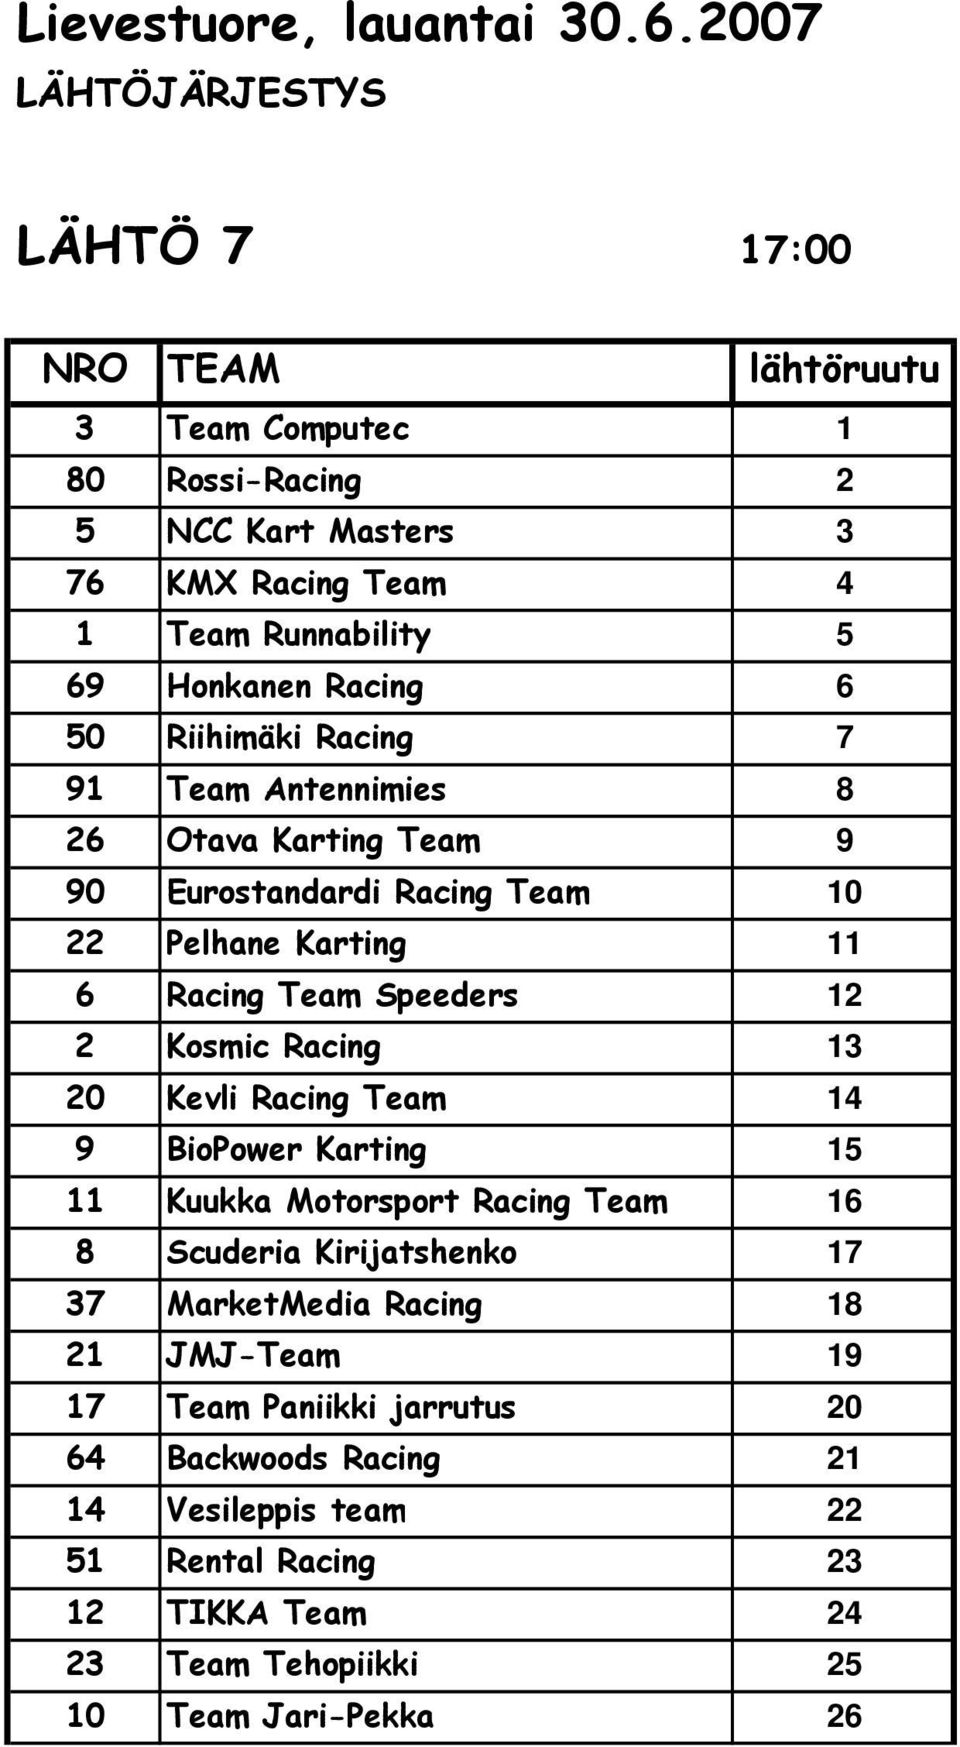 13 20 Kevli Racing Team 14 9 BioPower Karting 15 11 Kuukka Motorsport Racing Team 16 8 Scuderia Kirijatshenko 17 37 MarketMedia Racing 18 21 JMJ-Team